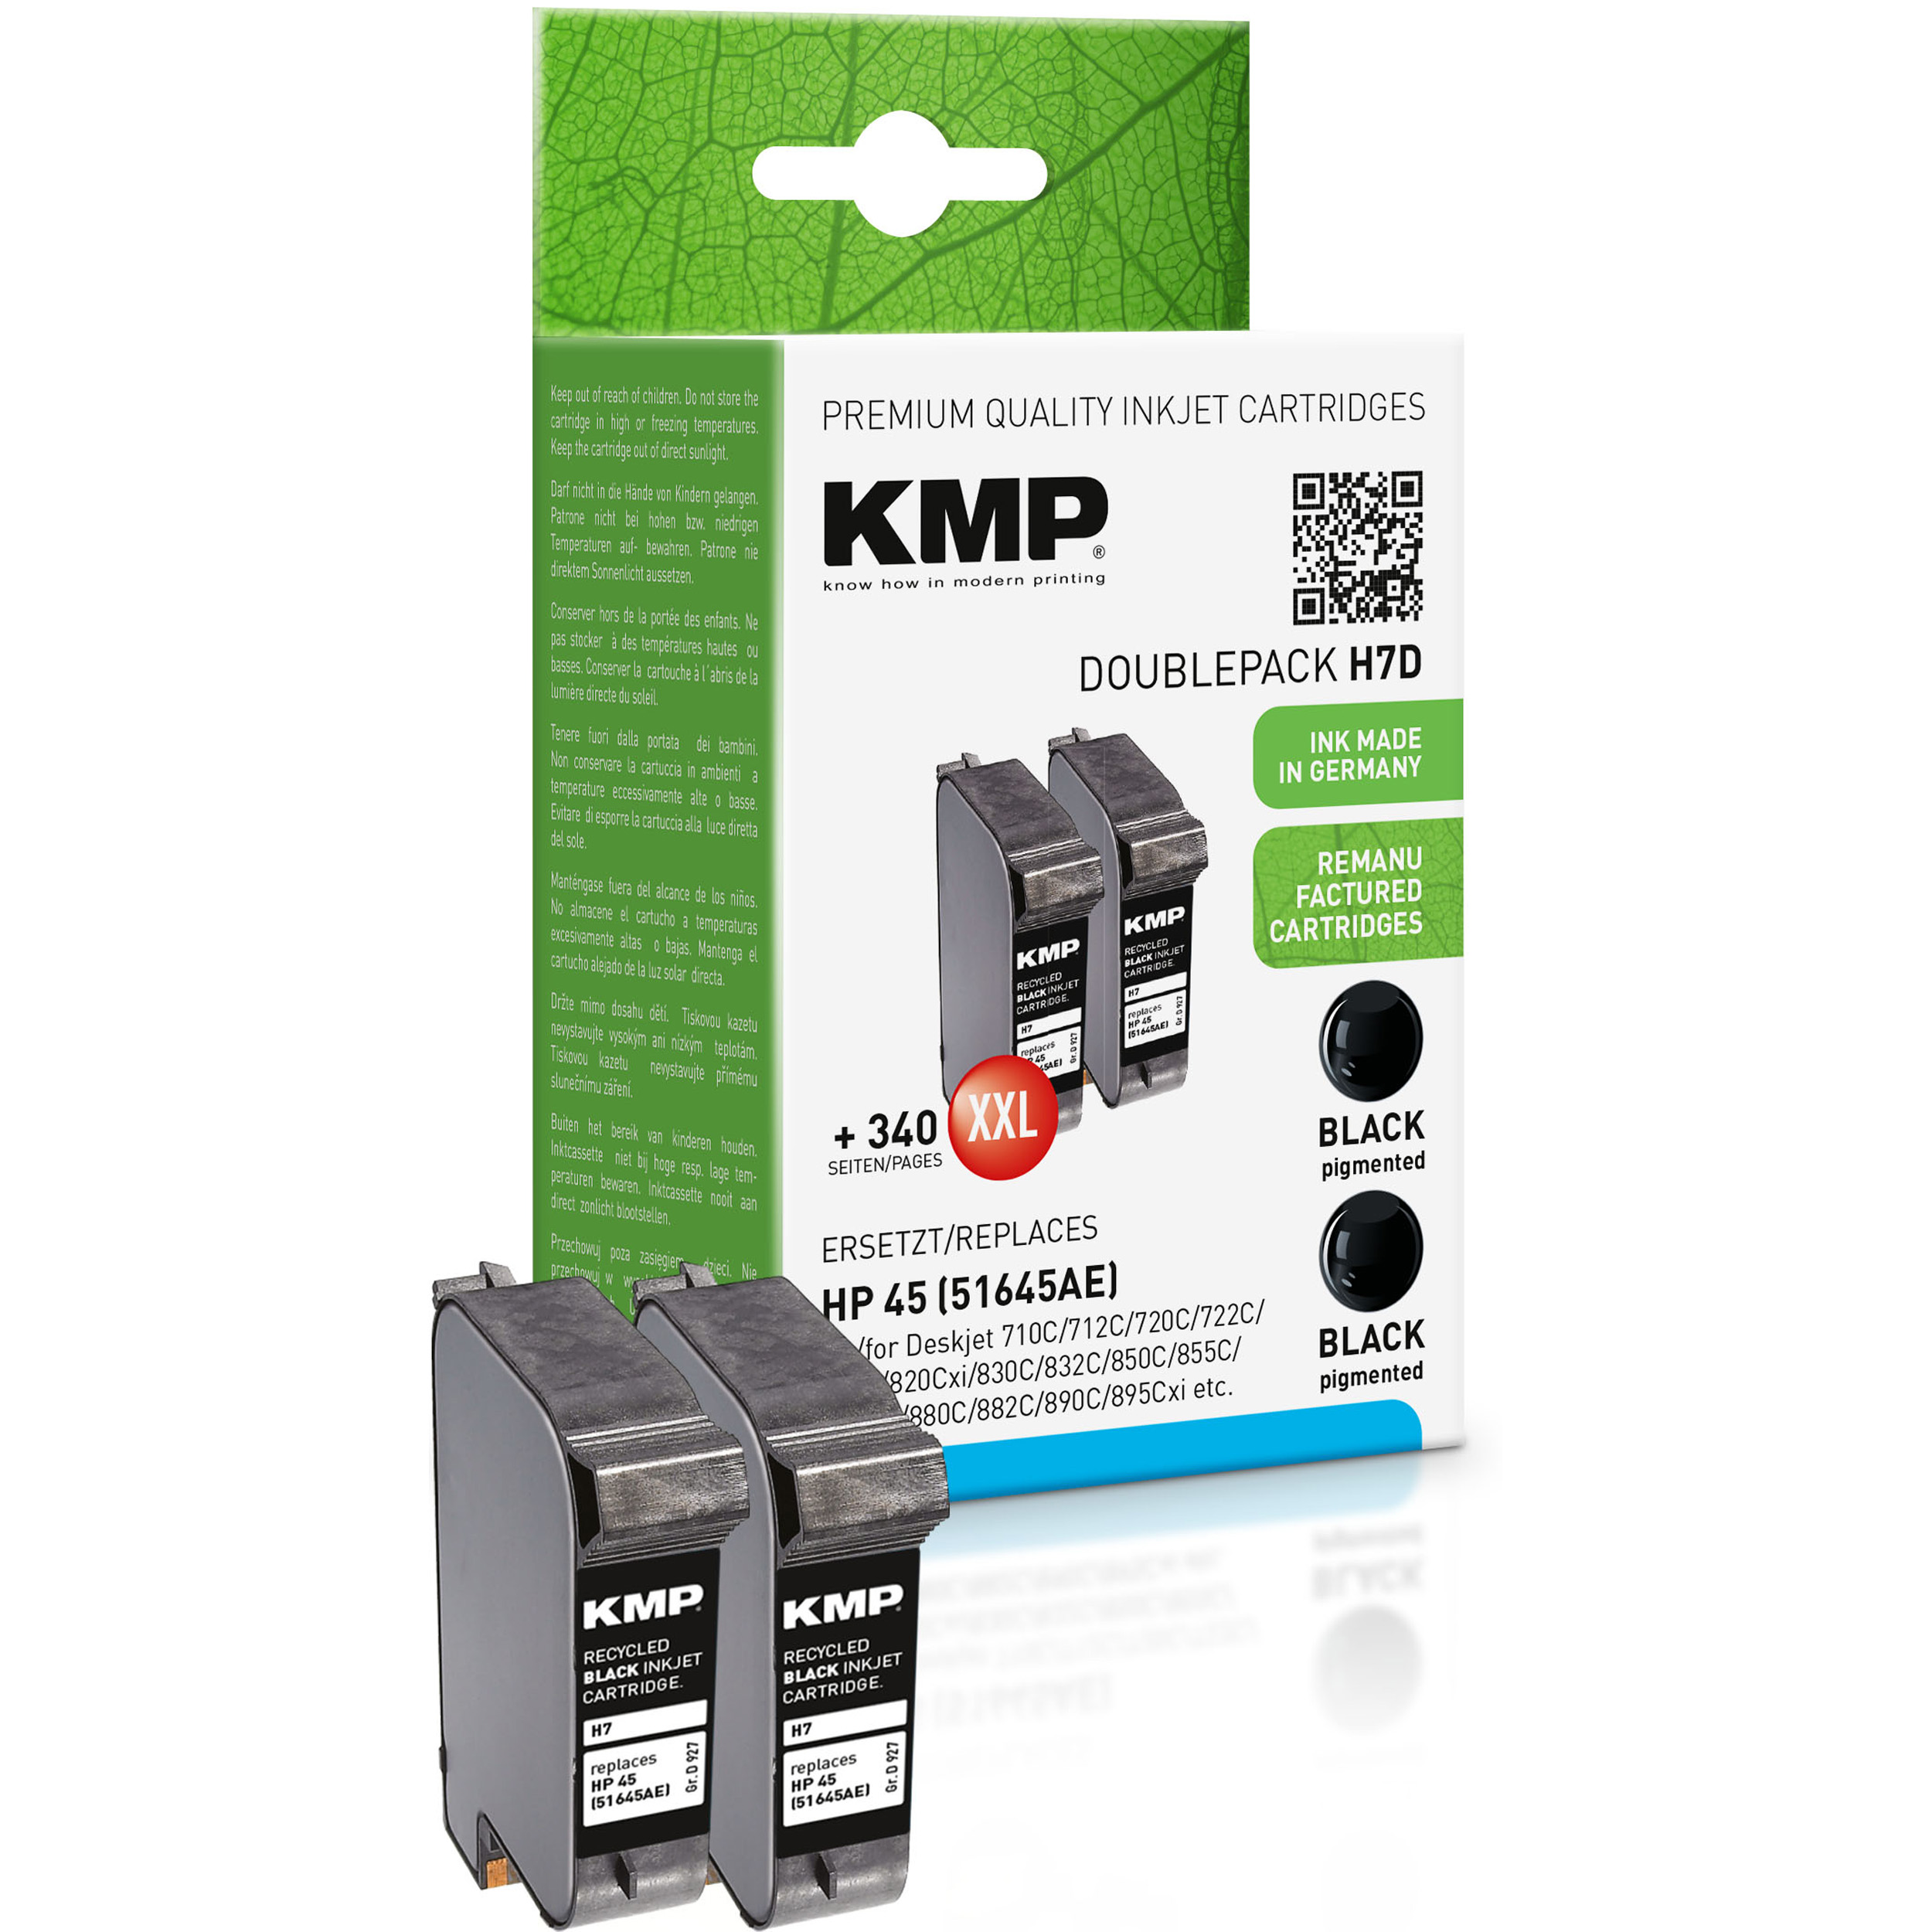 KMP Tintenpatrone für HP 45 Black Doppelpack black Ink (51645AE) Cartridge (51645AE)